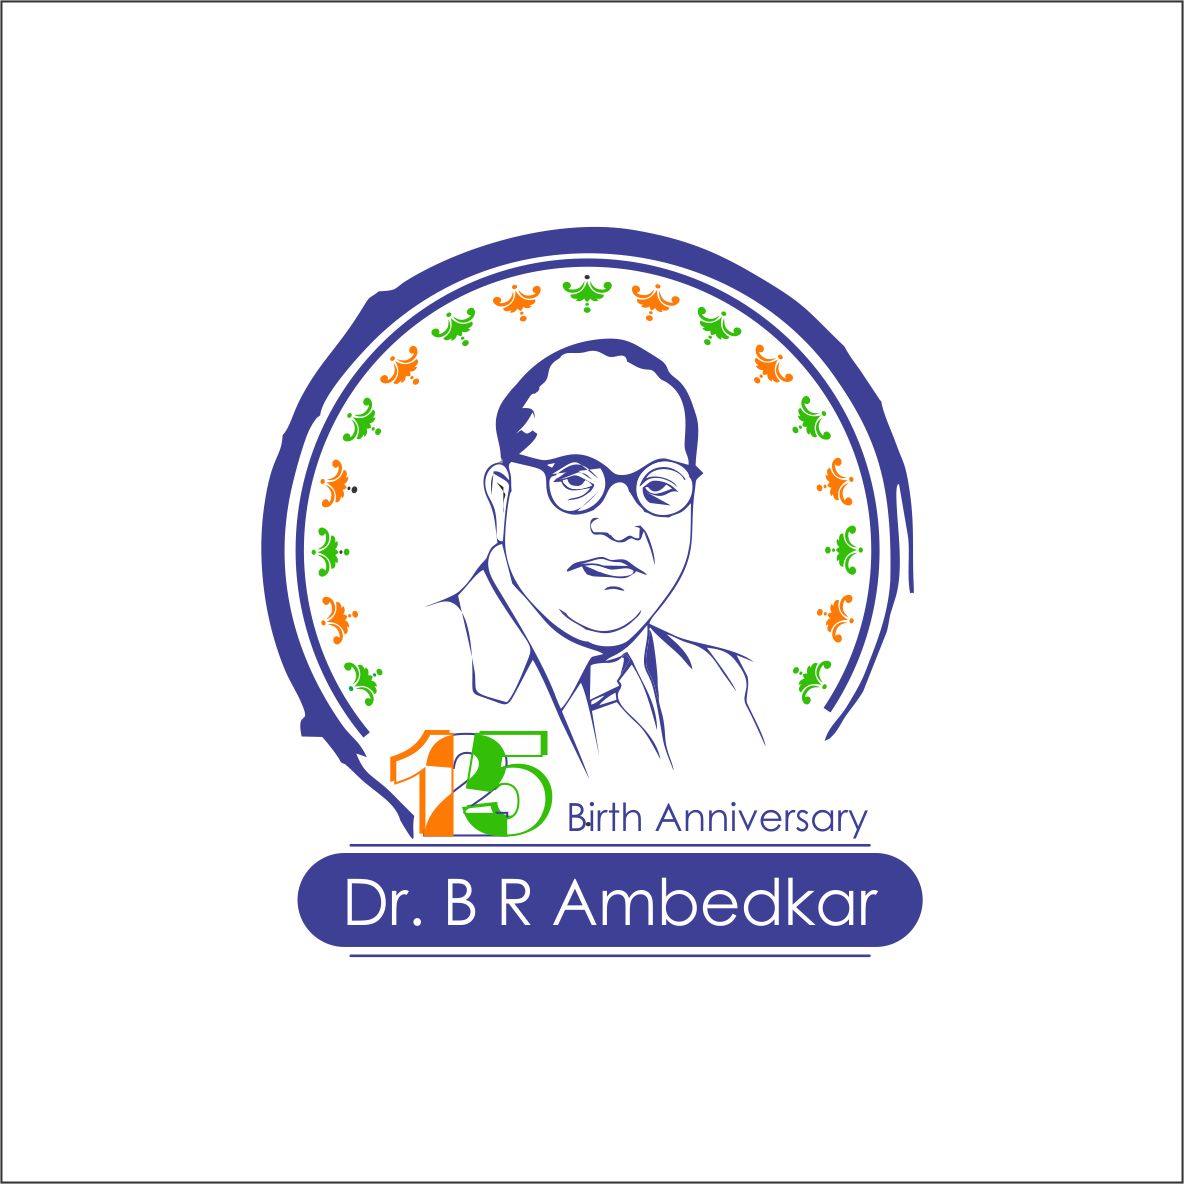 Dr. Ambedkar International Mission, USA